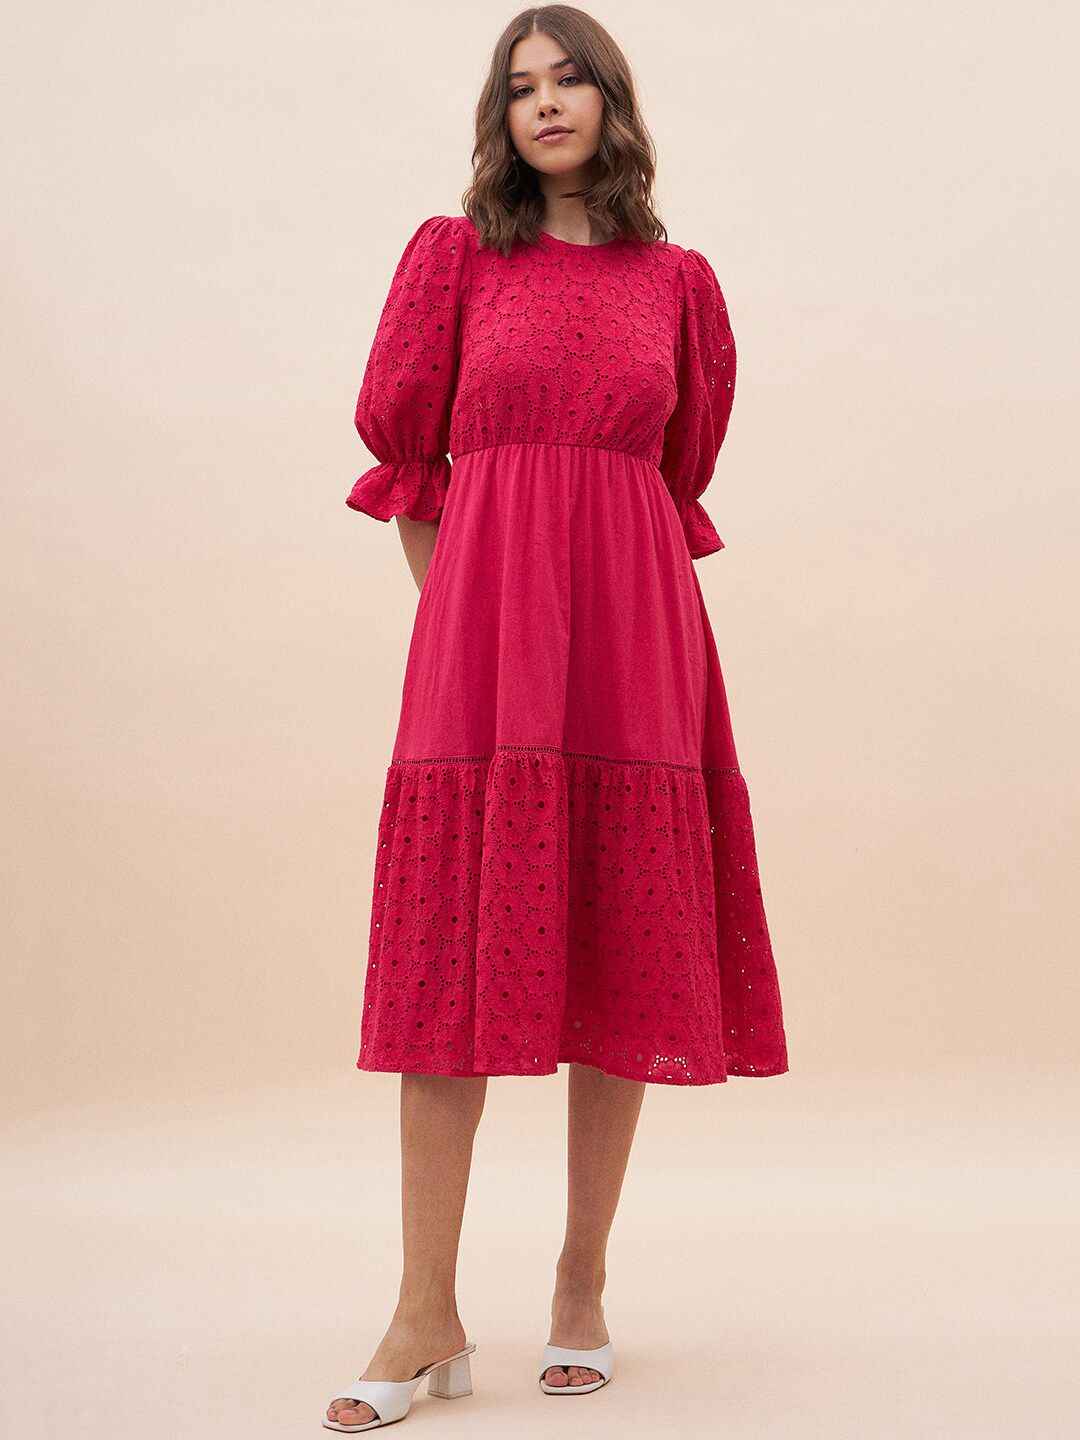 Femella Self Design Schiffli Puff Sleeves Gathered Cotton Fit & Flare Dress Price in India